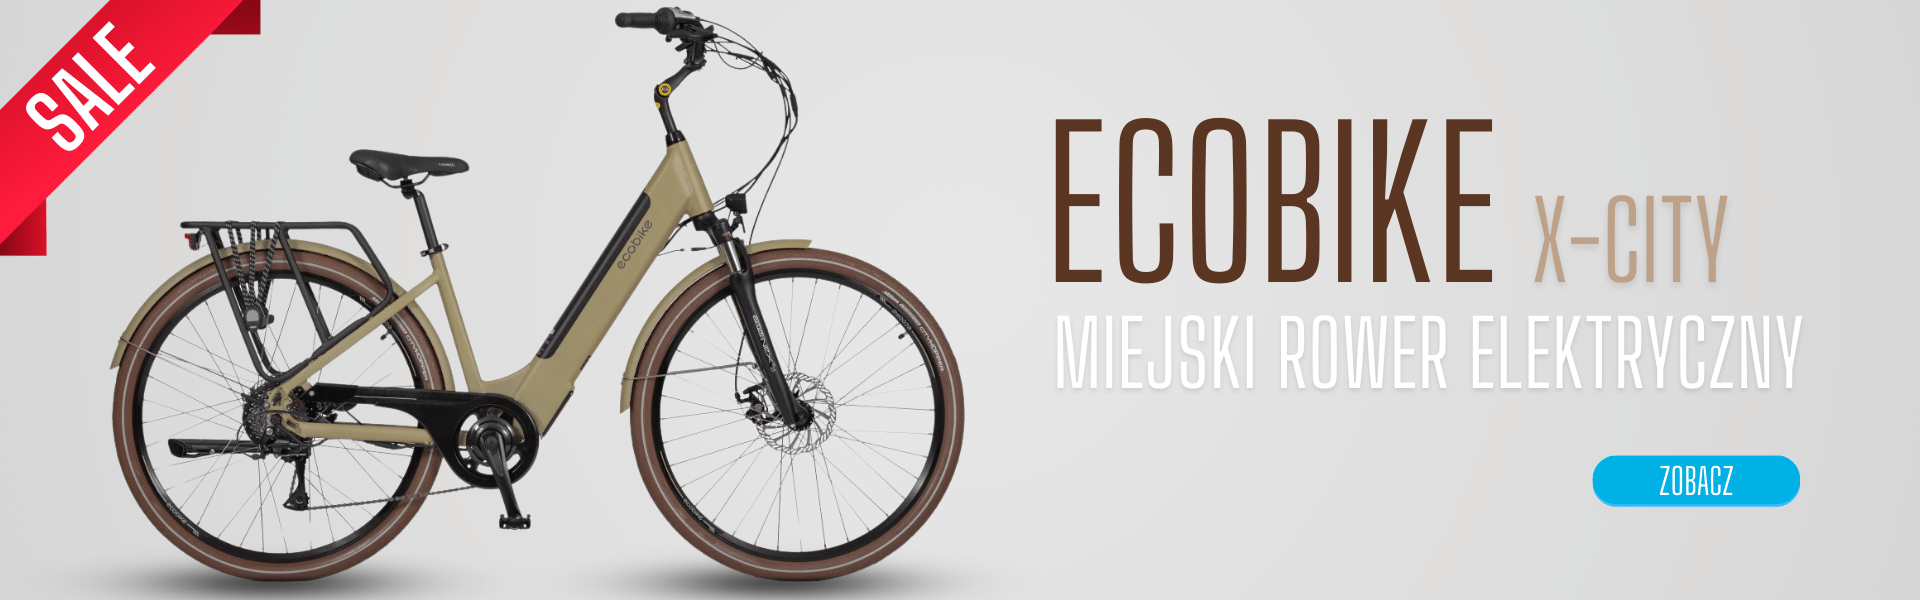 Ecobike X-City